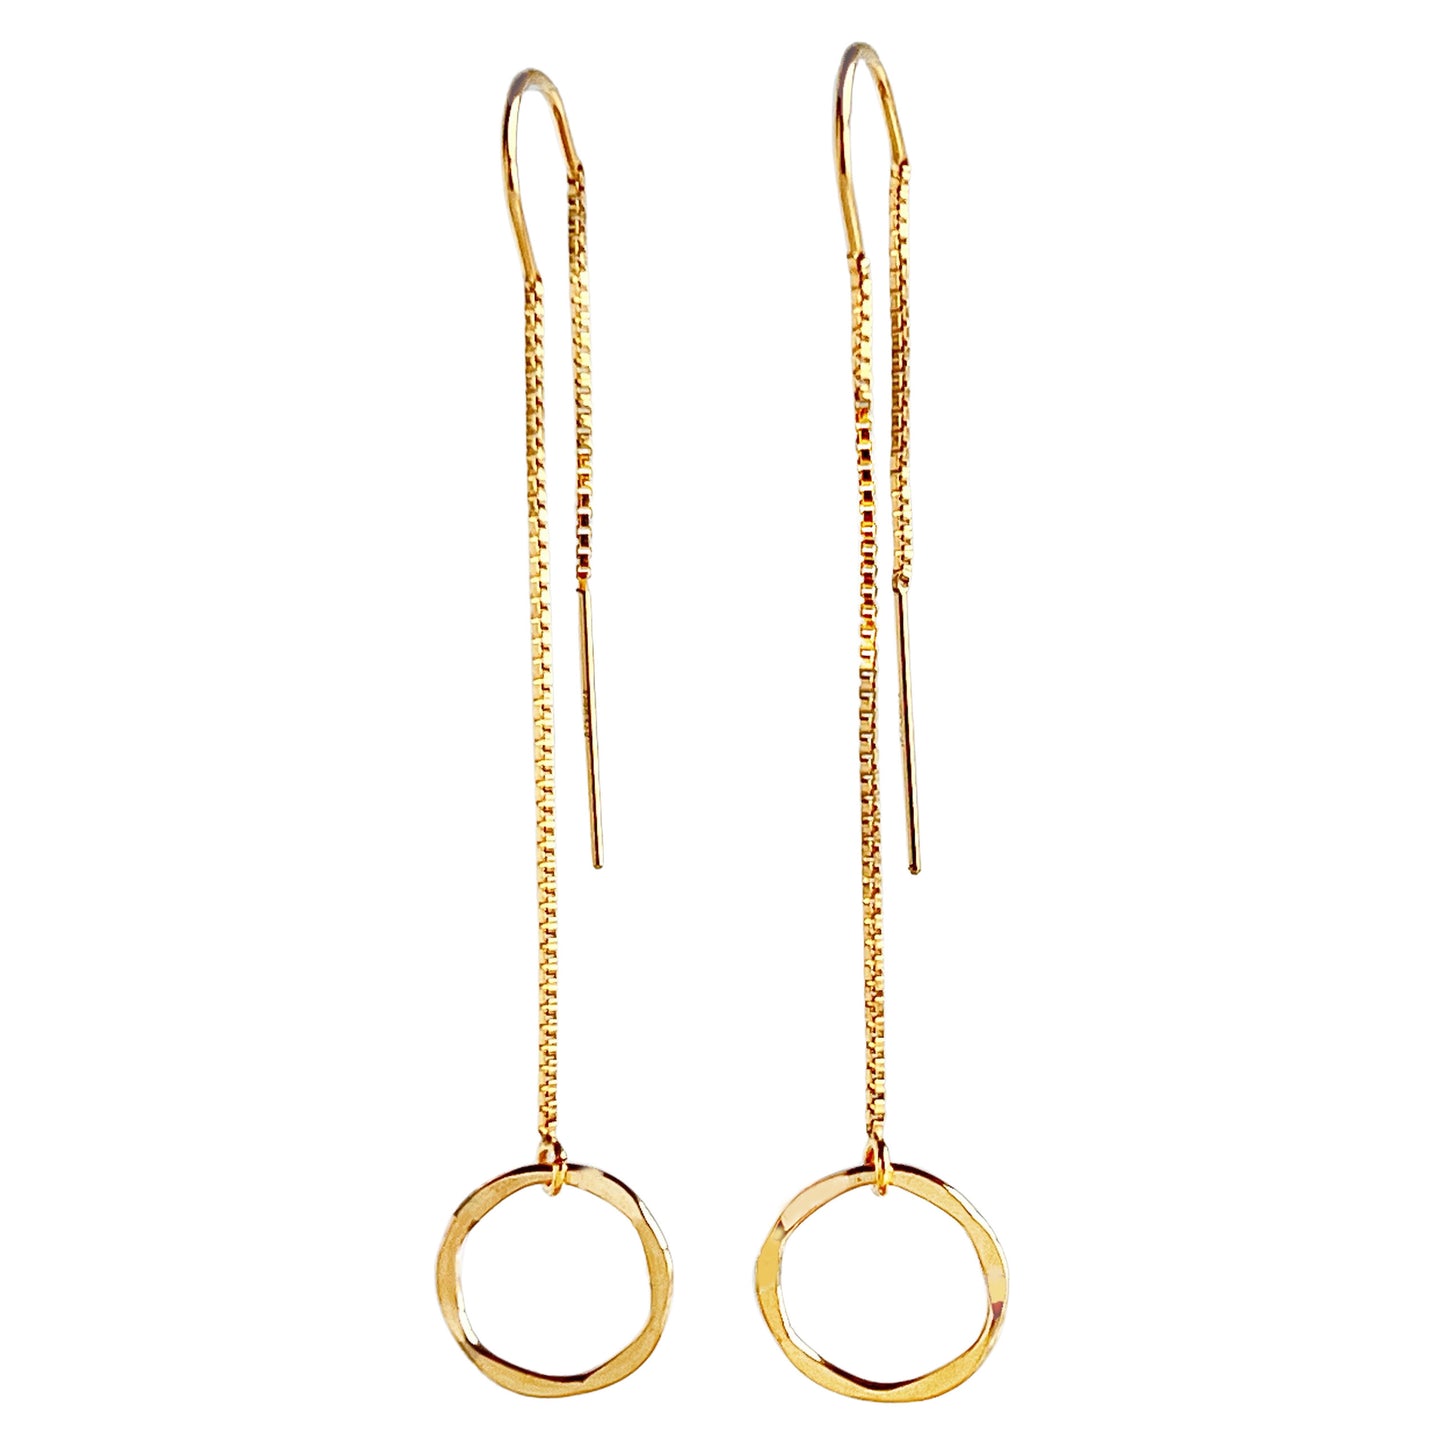 Chic Long Dangle Threader Earrings - 925 Sterling Silver or 14k Gold Filled